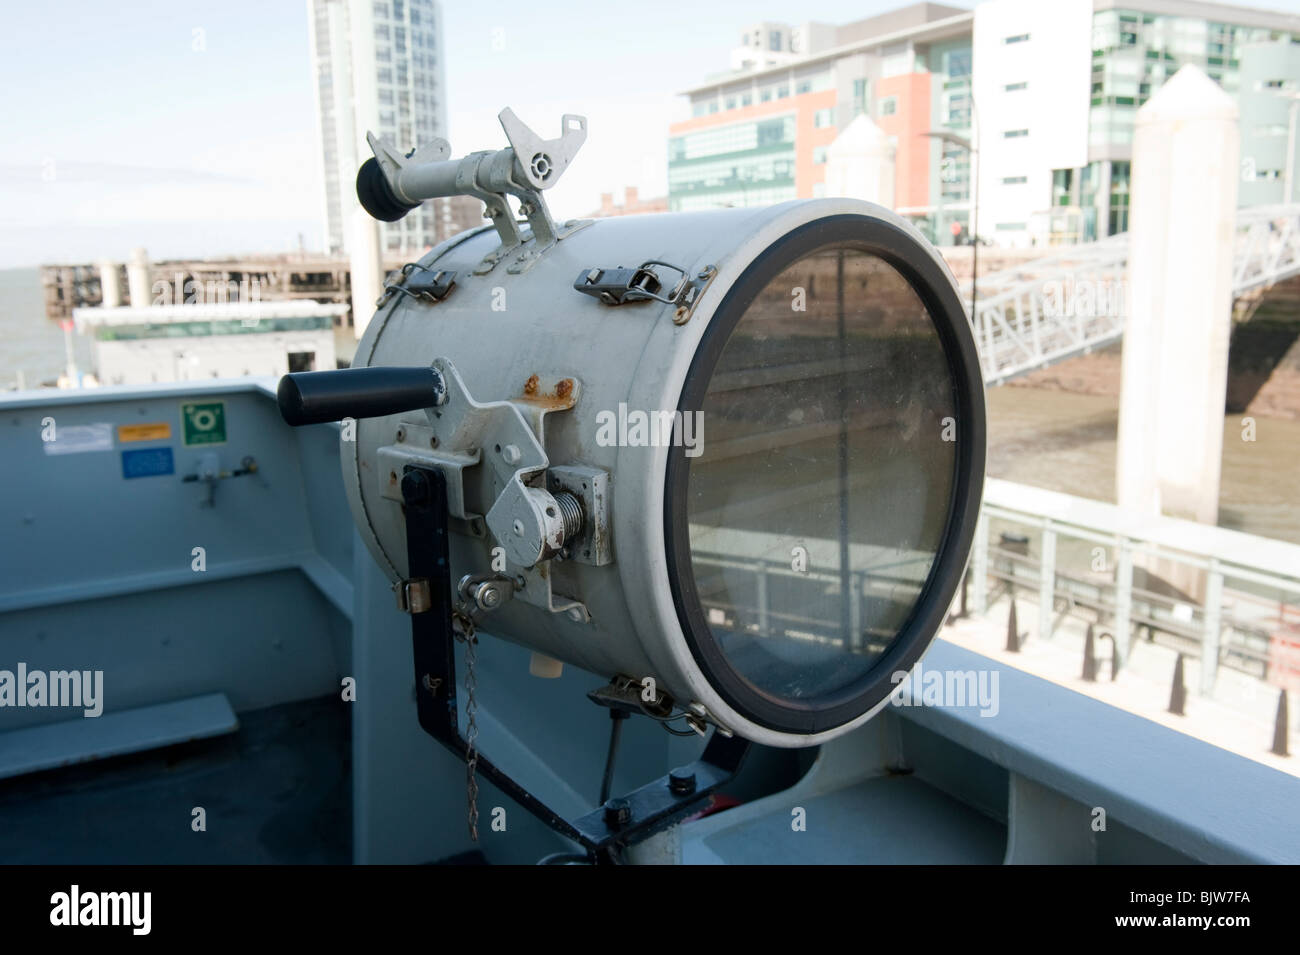 Royal Navy Signal Lamp on disused ship Stock Photo - Alamy